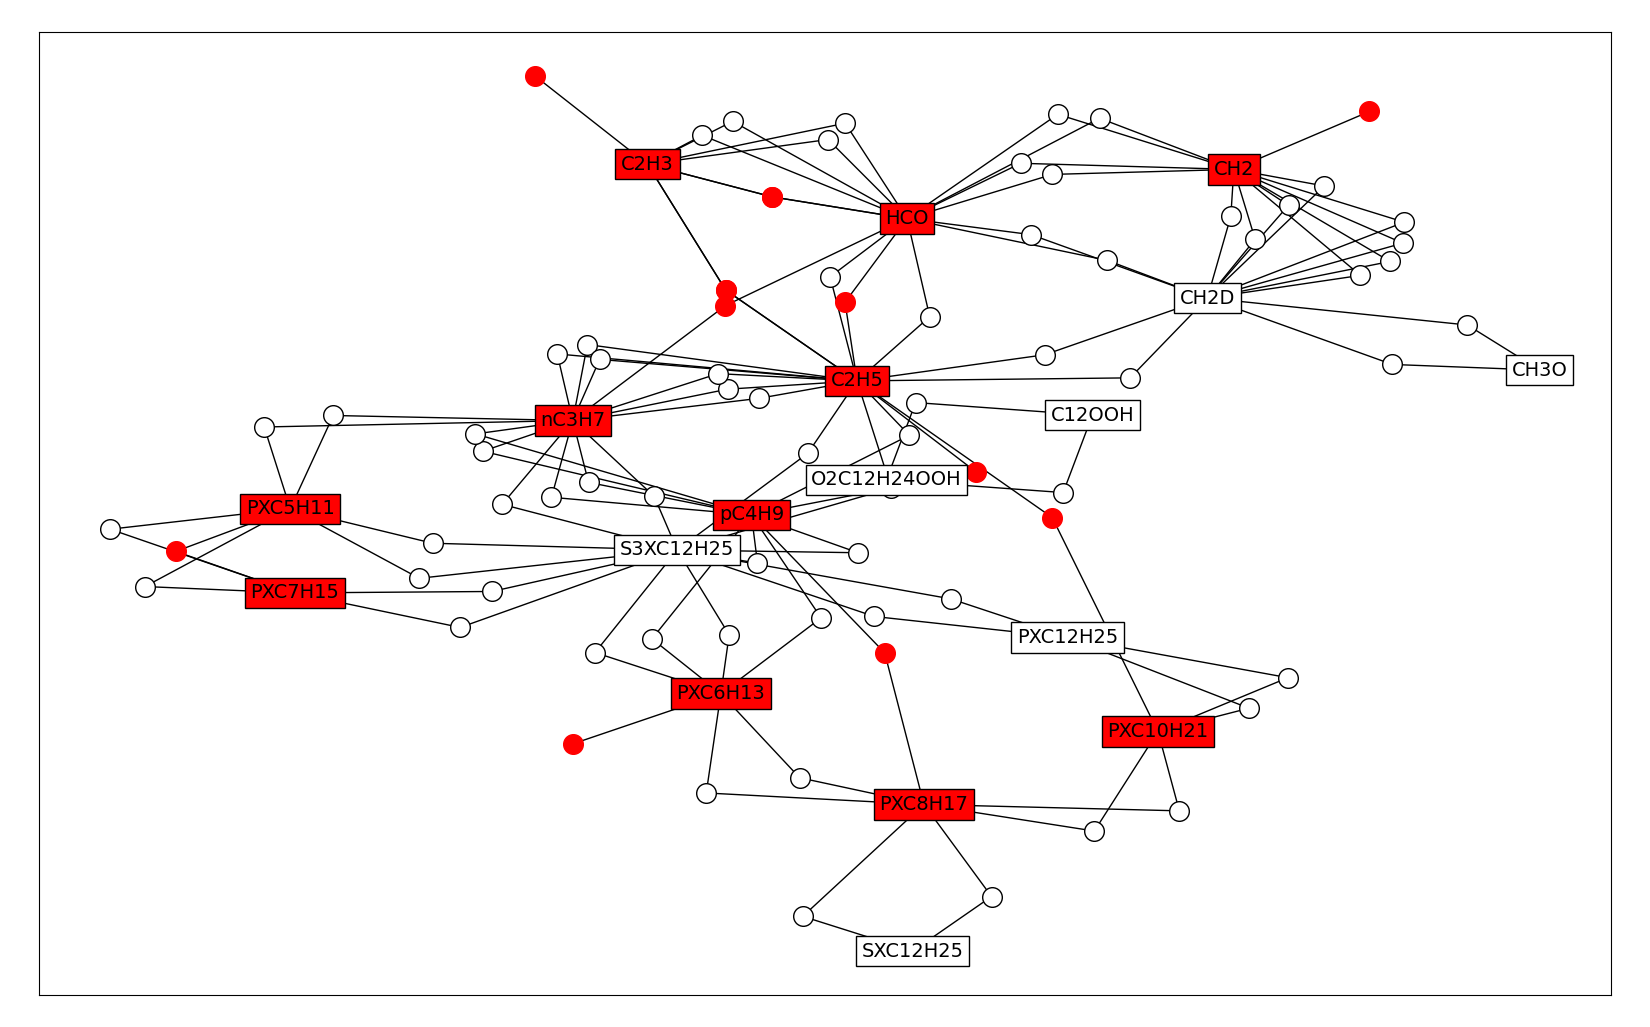 Graph of dependencies between QSS species augmented with reactions.